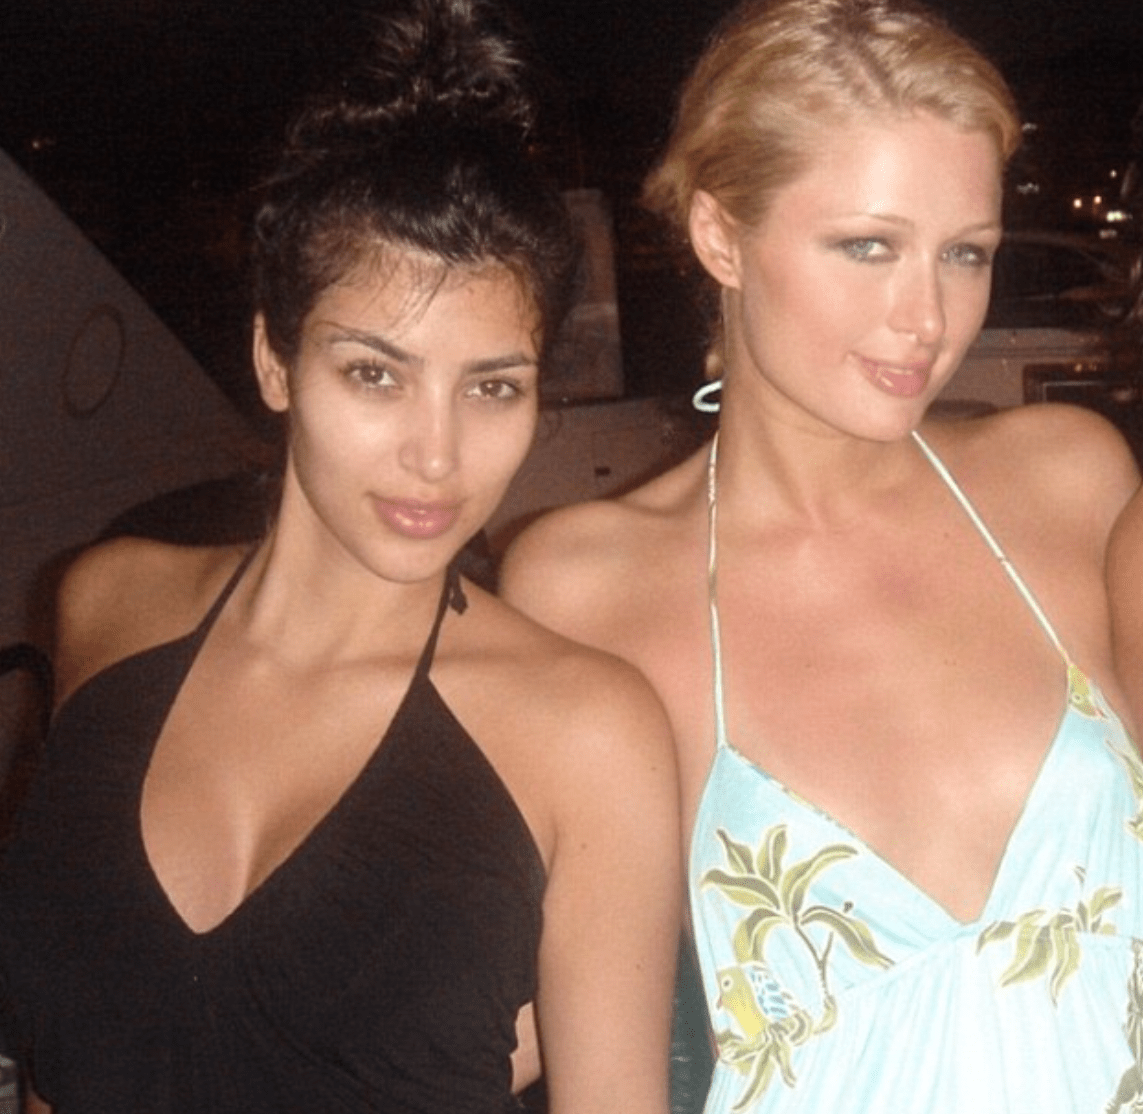 Paris Hilton Porn Gig - Kim Kardashian Was With Former BFF Paris Hilton When Sex Tape Leaked!